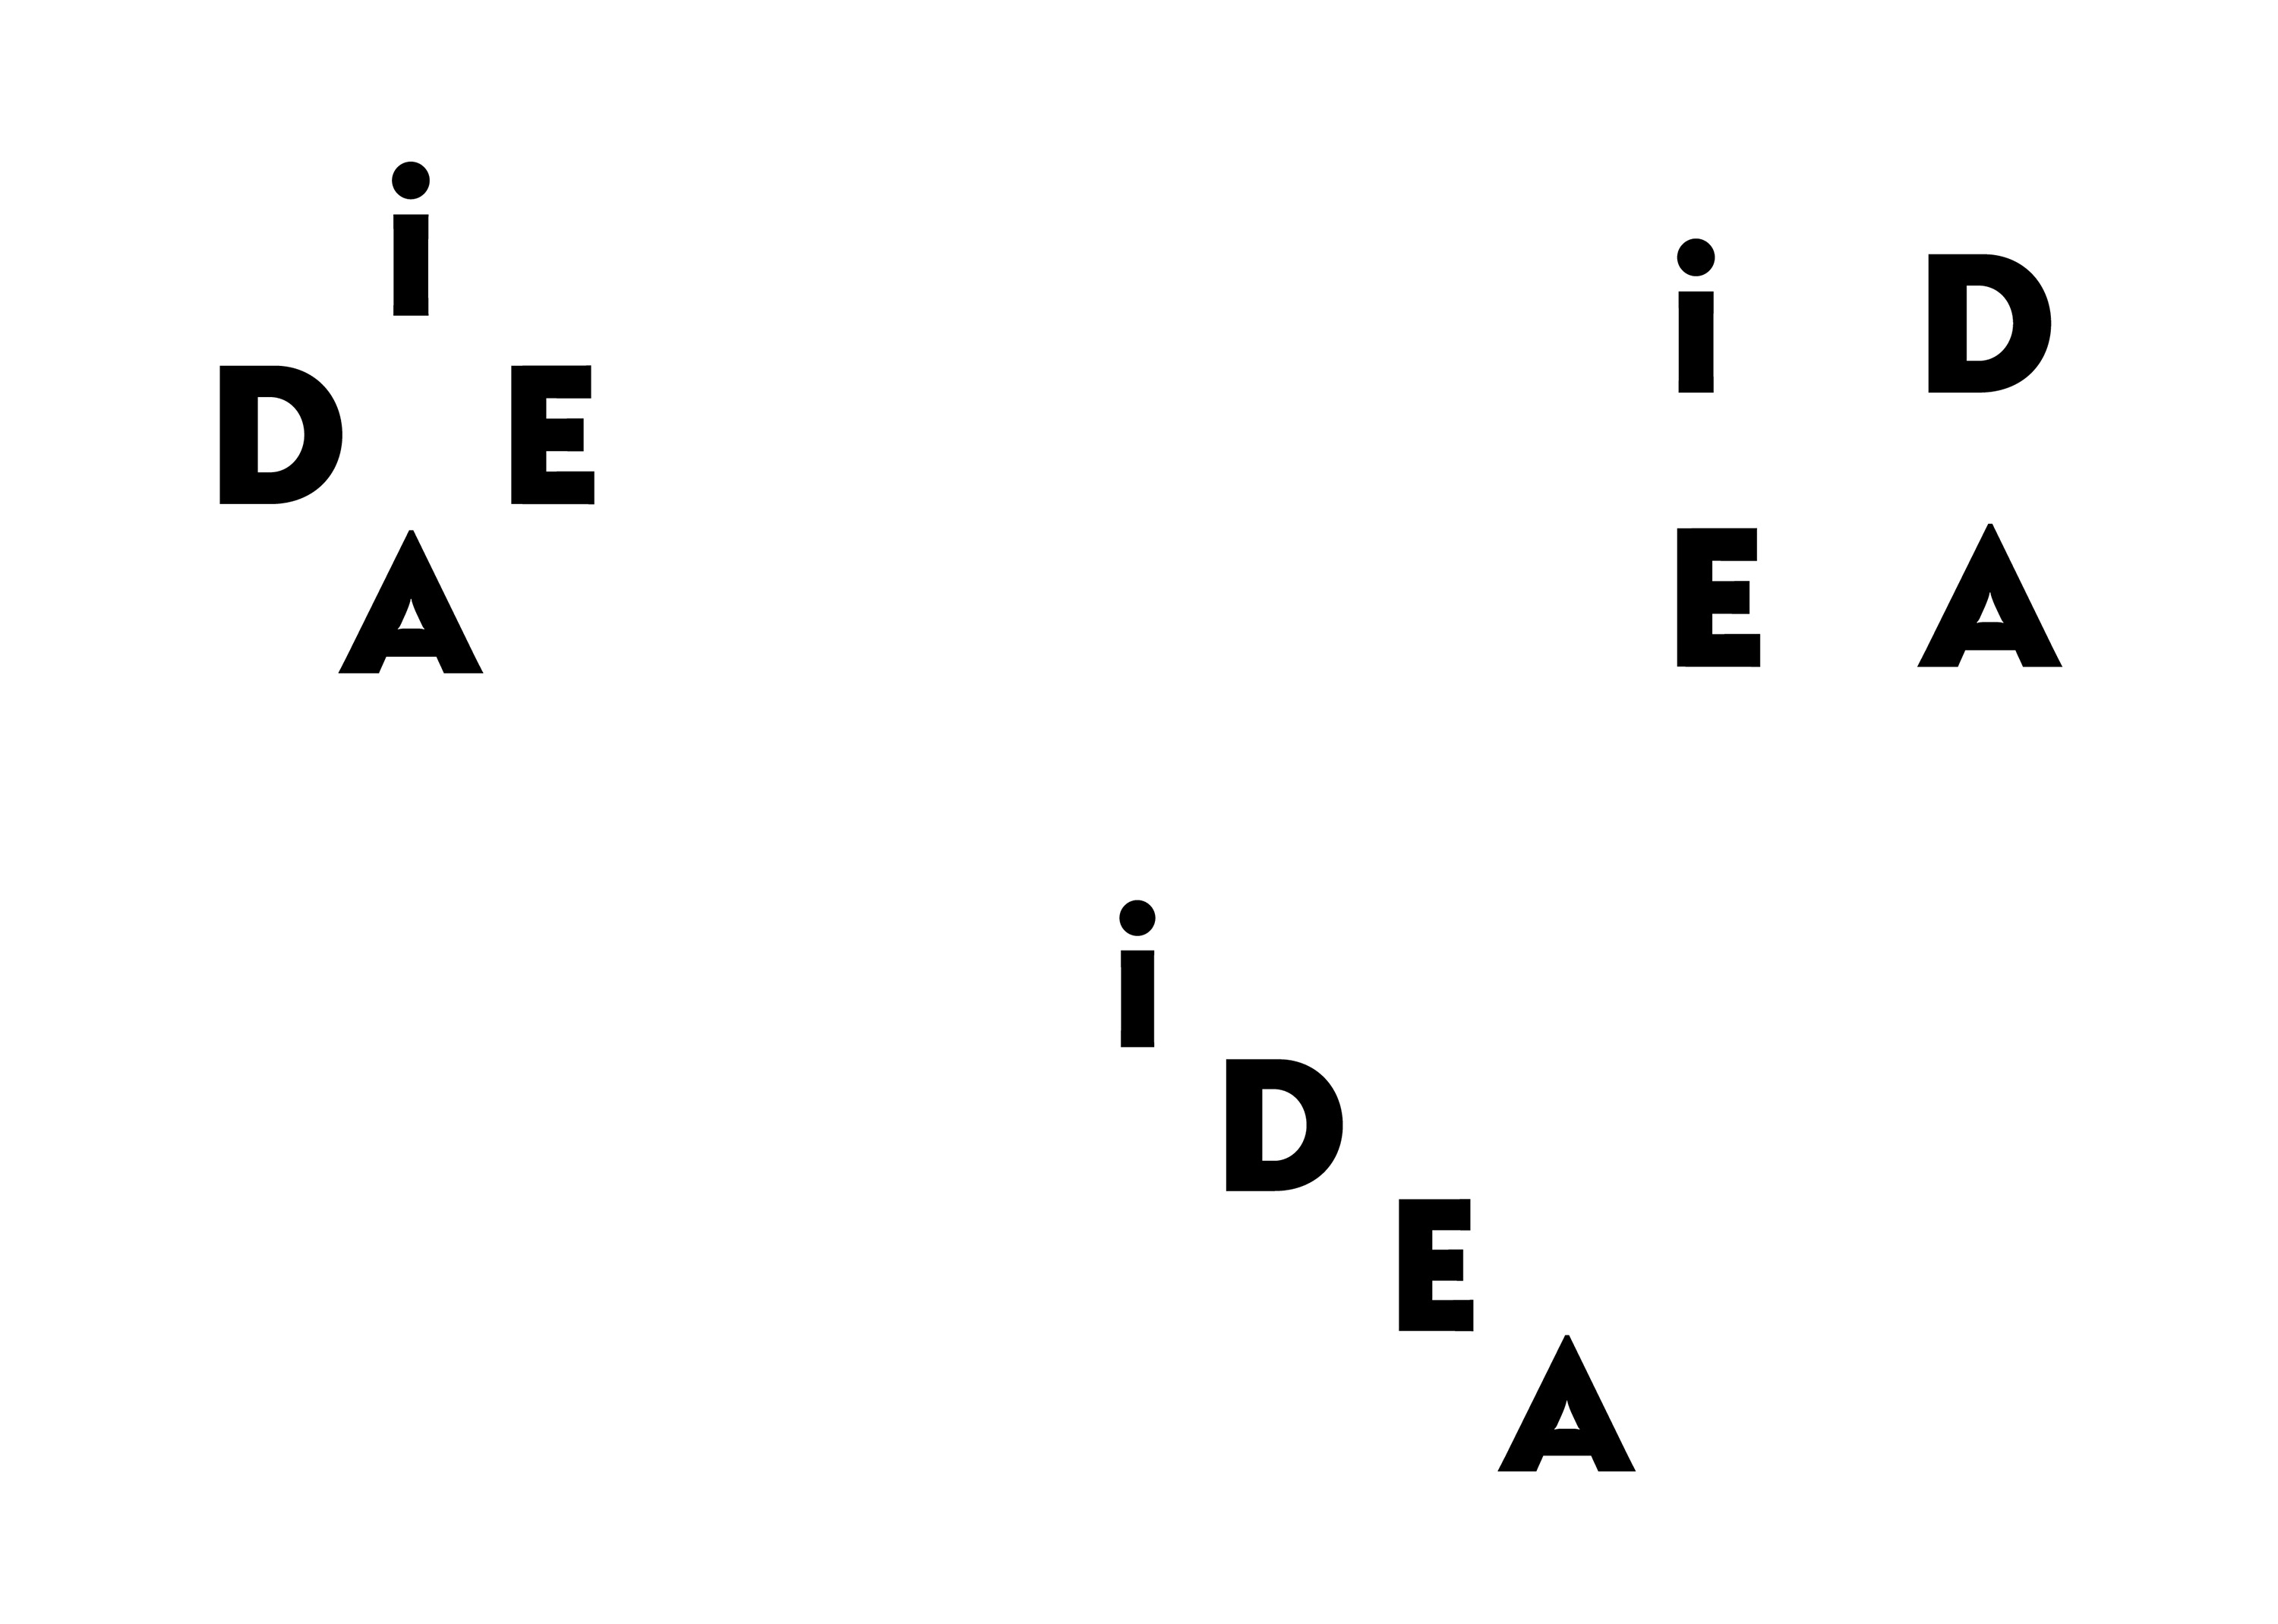 IDEA, 2016